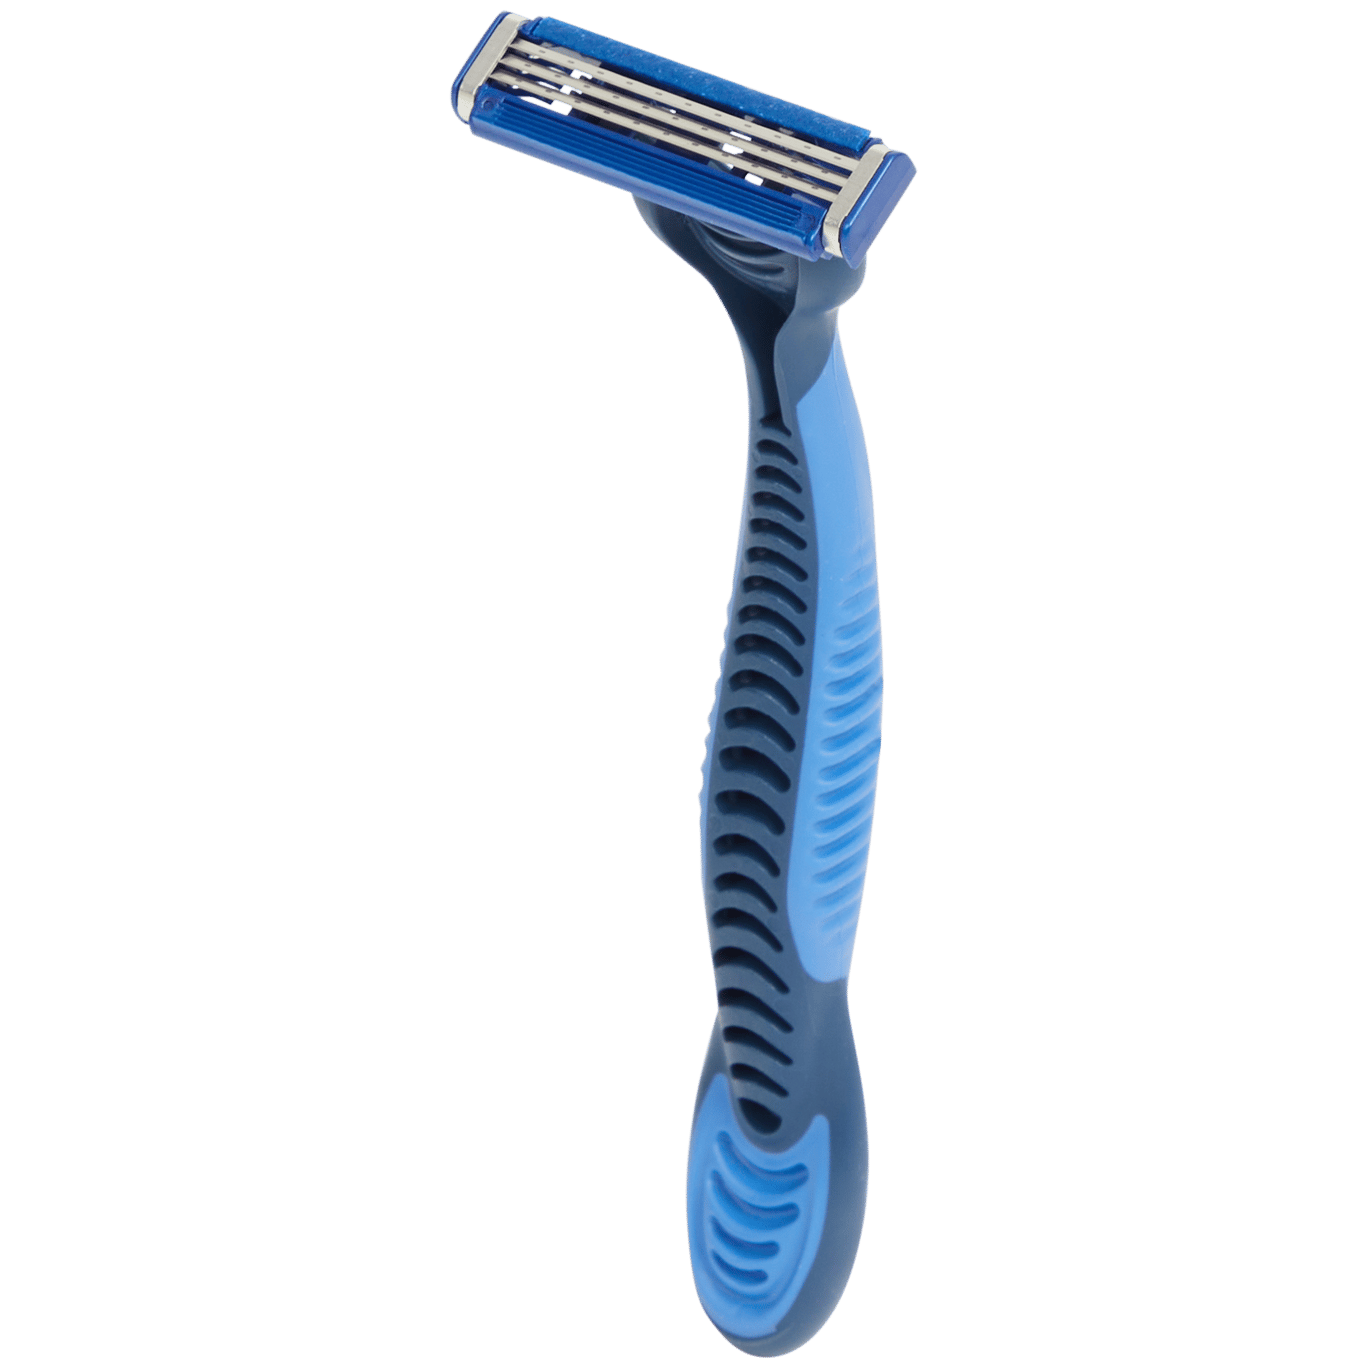 Cuchillas de afeitar Gillette Sensor 3 Comfort